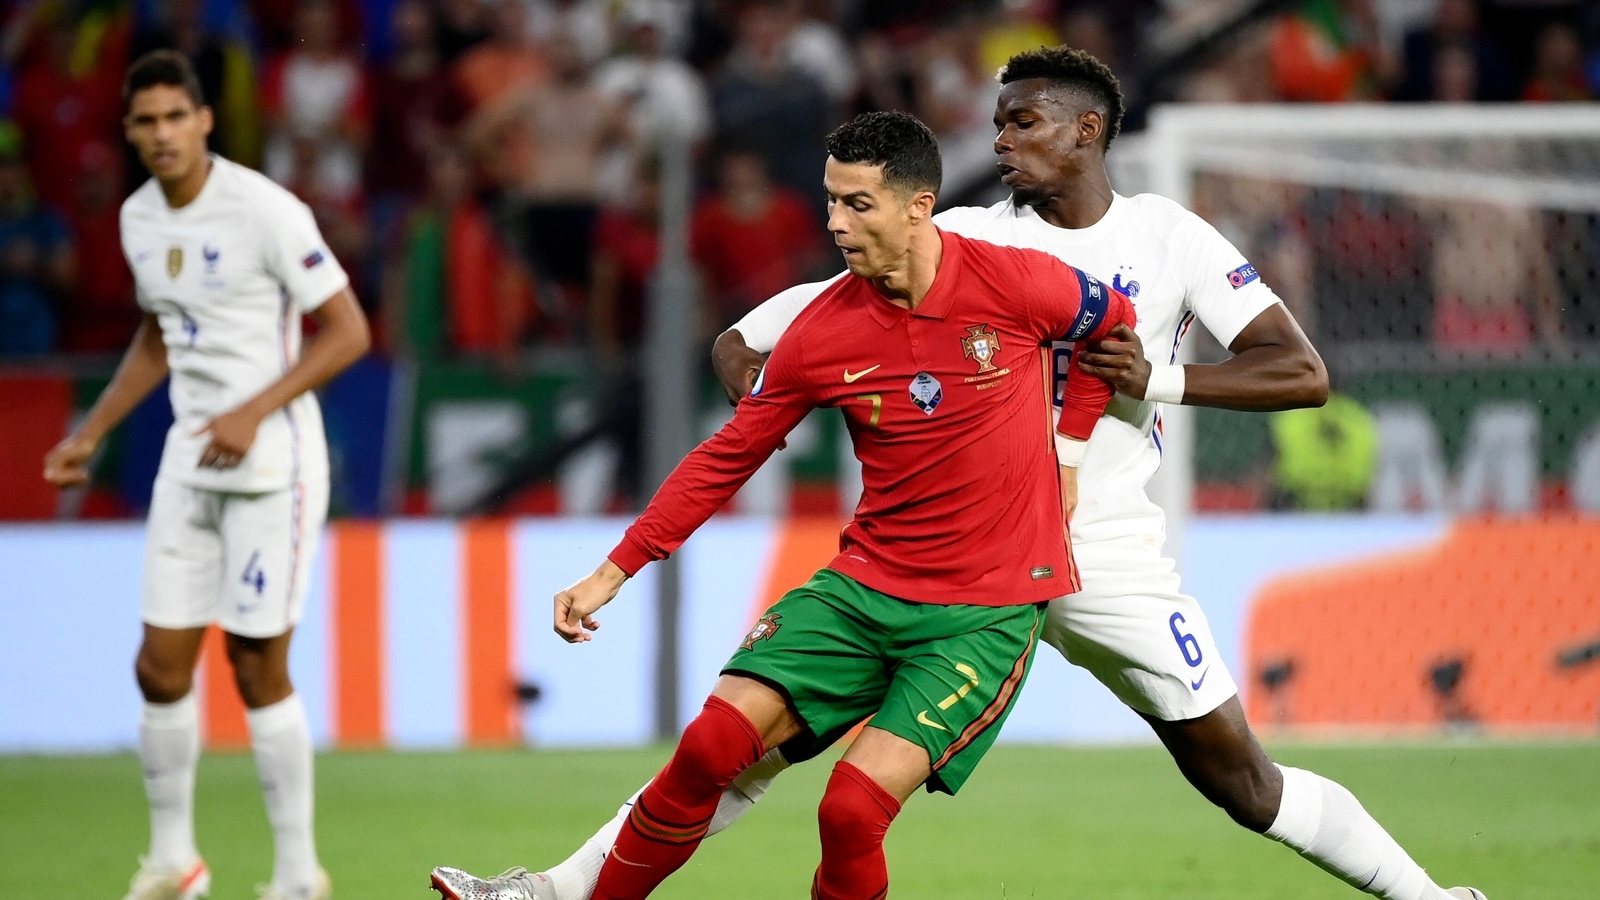 Euro 2020 Portugal Vs France Live Football Score Battle On Between Ronaldo And Pogba Portugal 0 0 France Newspostalk Global News Platform